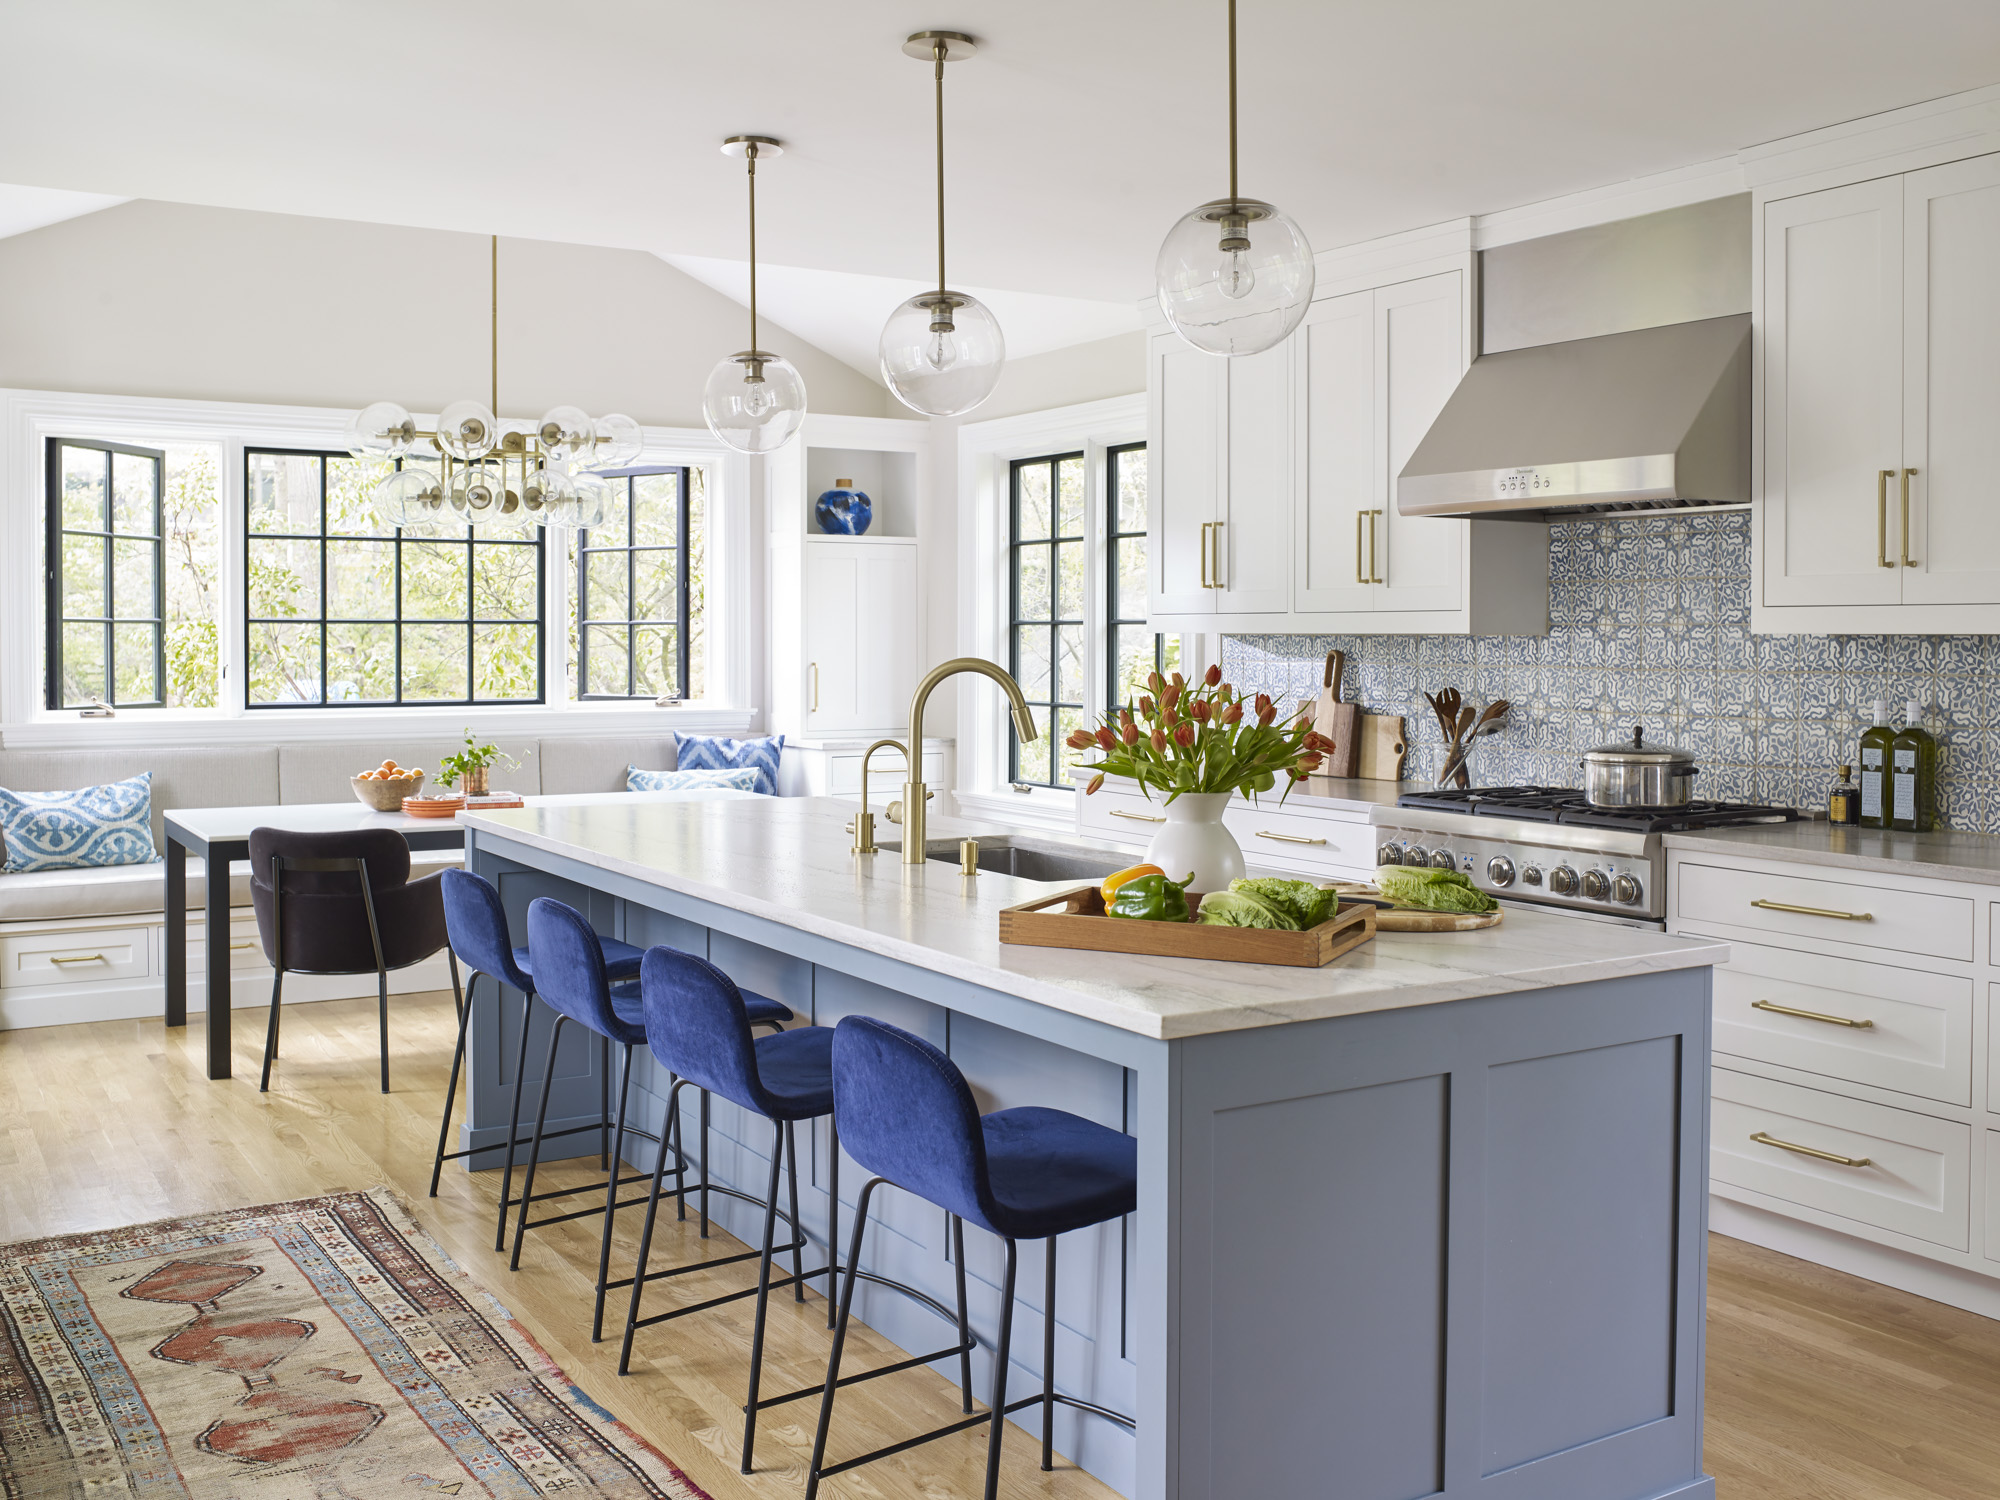 Rad White and Blue Tile for Your Kitchen Floor, Backsplash or IslandStudio Dearborn Interior